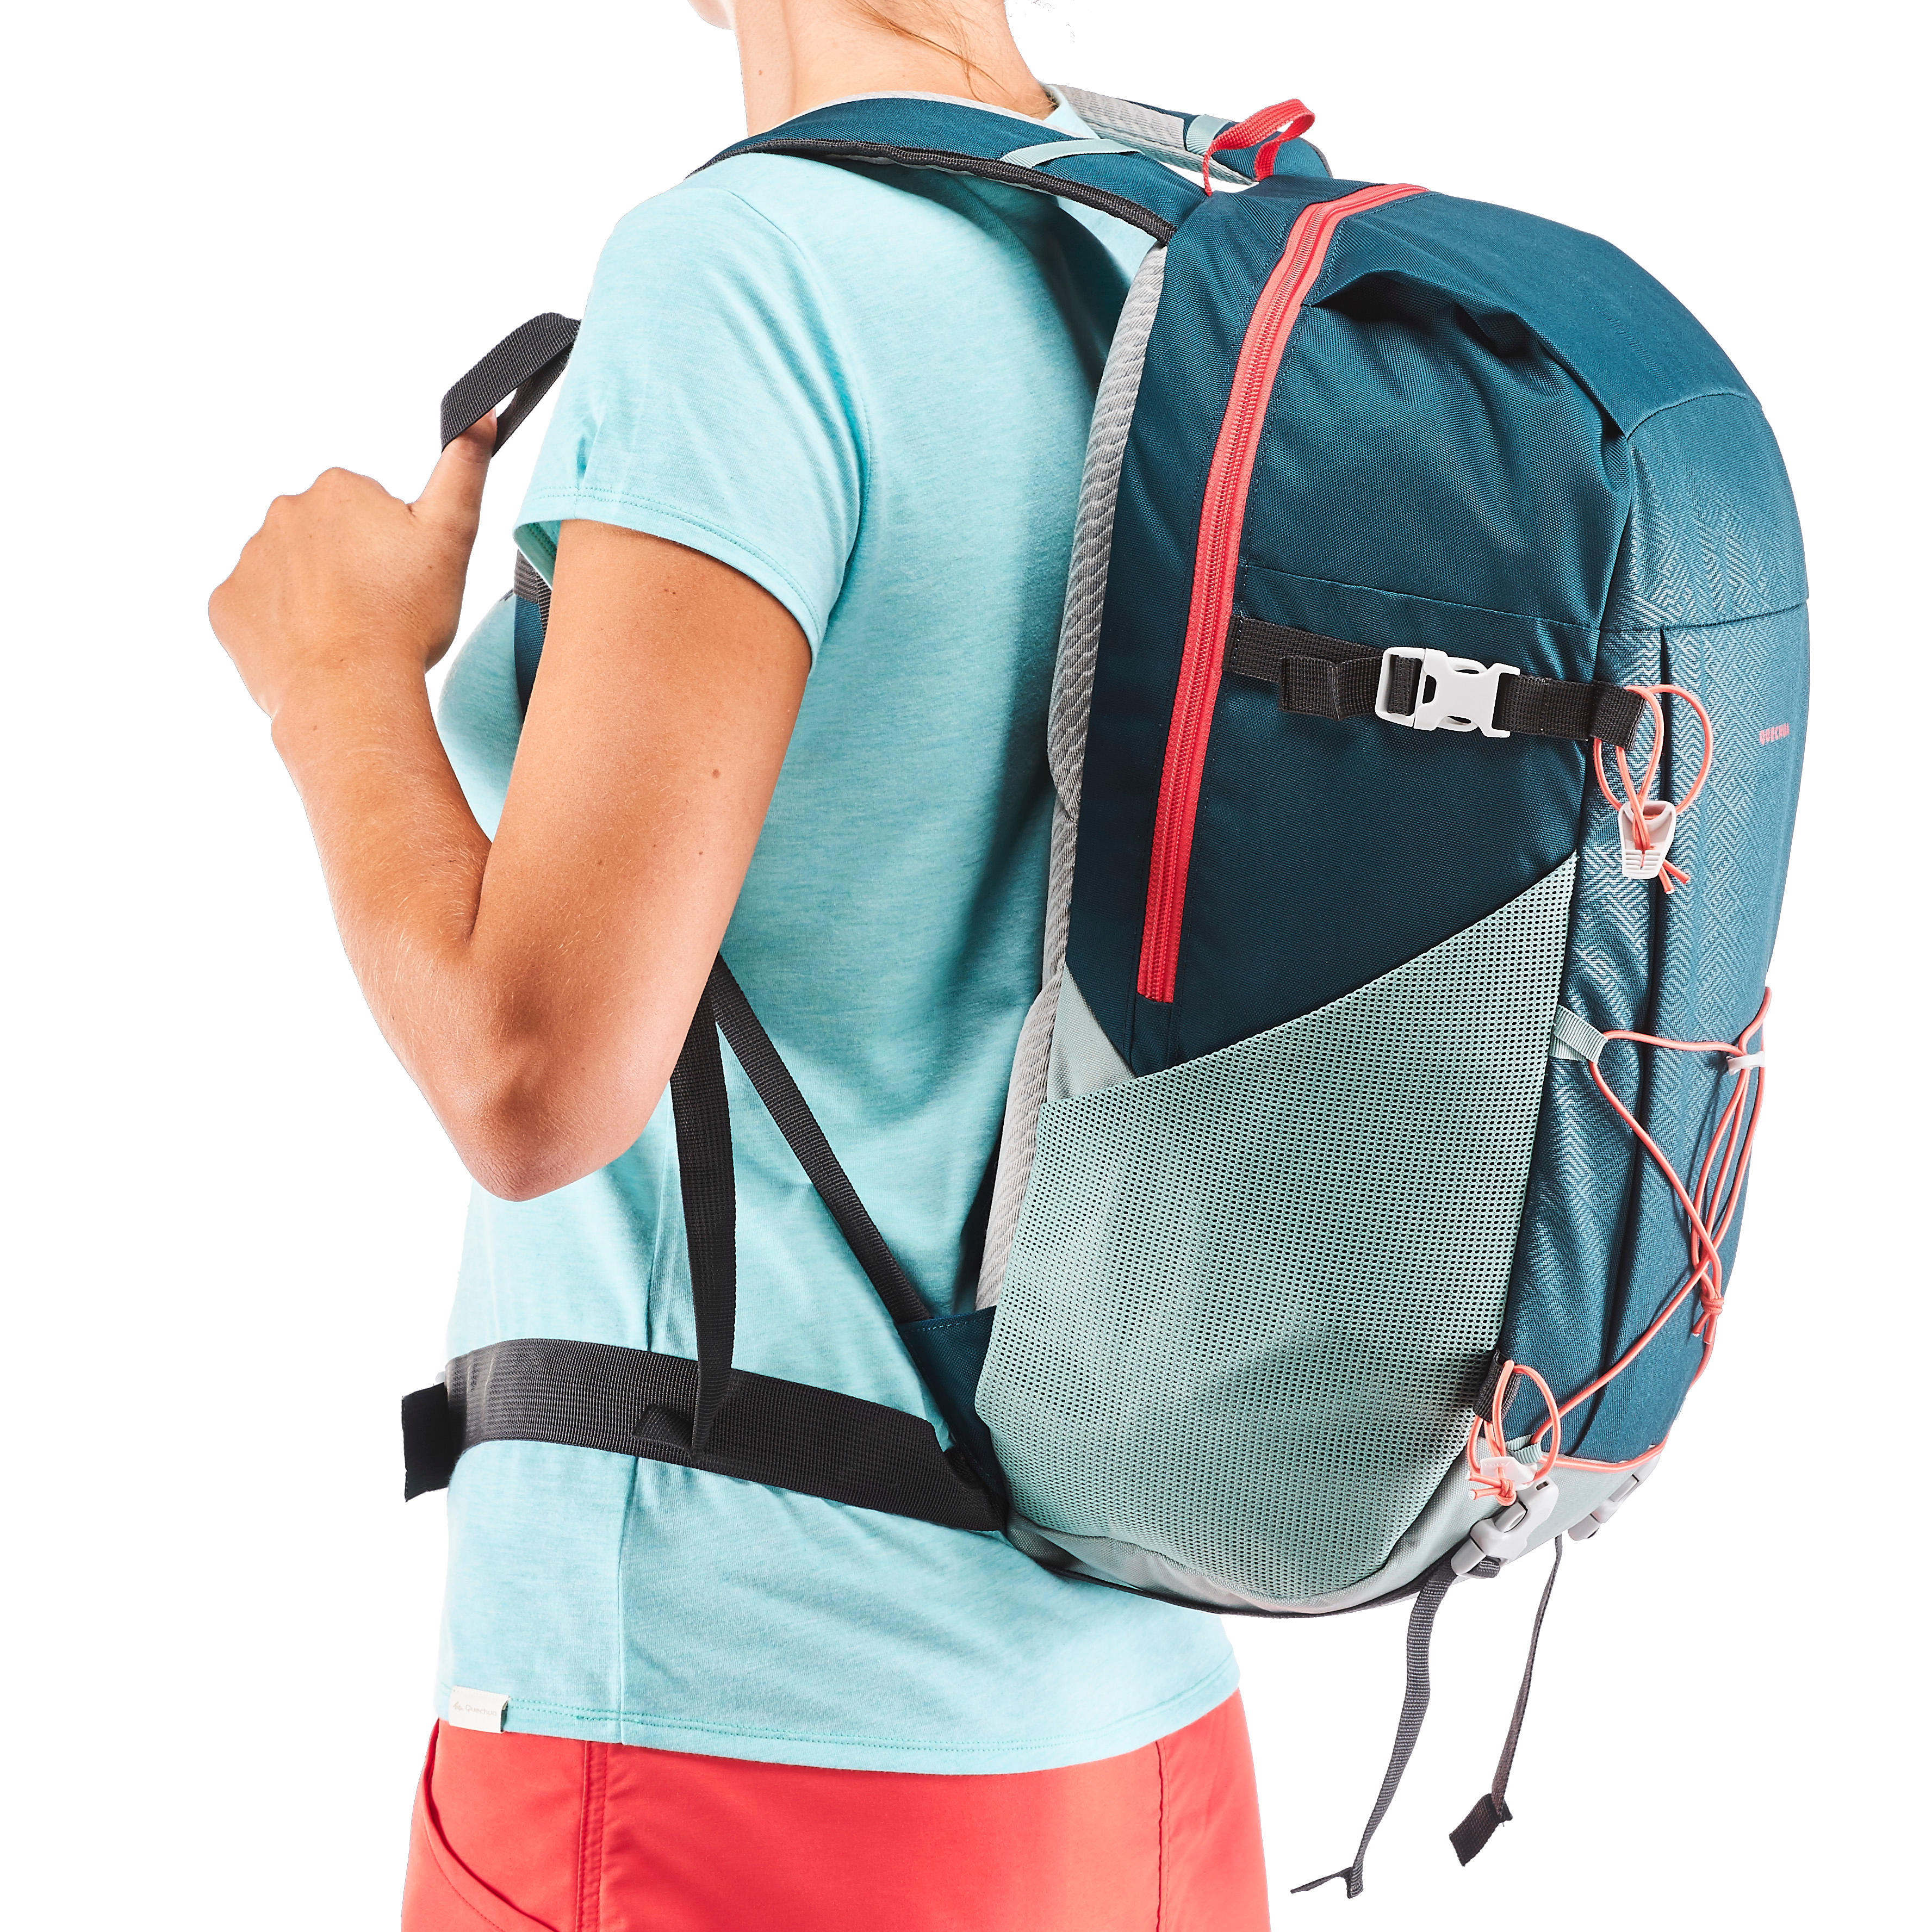 DECATHLON KIPSTA Sports Bag Essential - 35L - Navy Blue | Catch.com.au